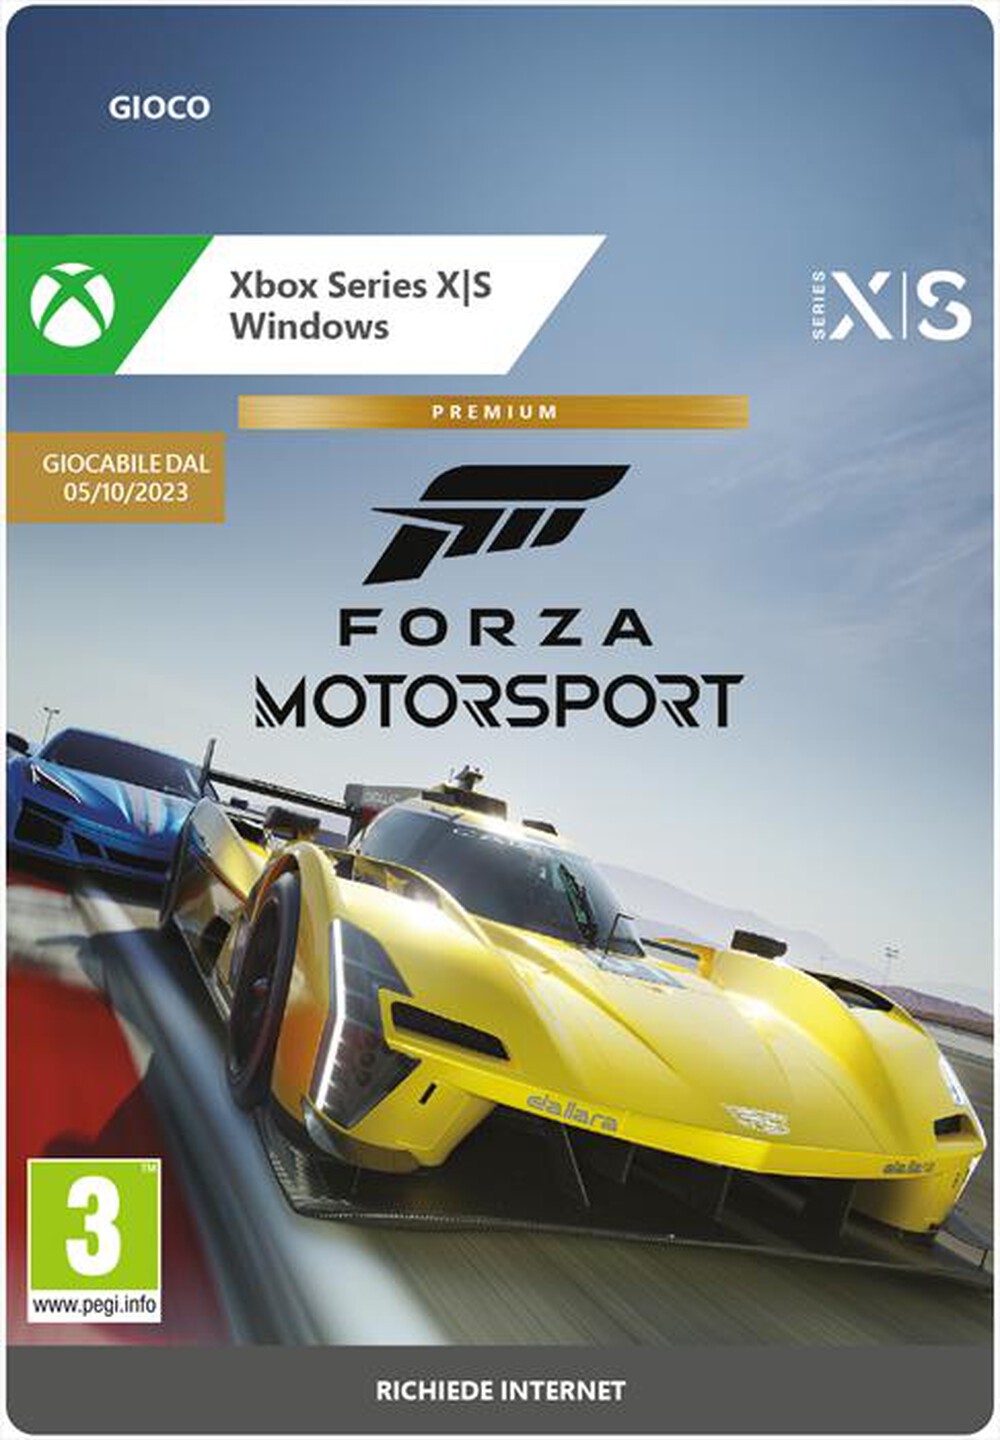 "MICROSOFT - Forza Motorsport Premium Edt"